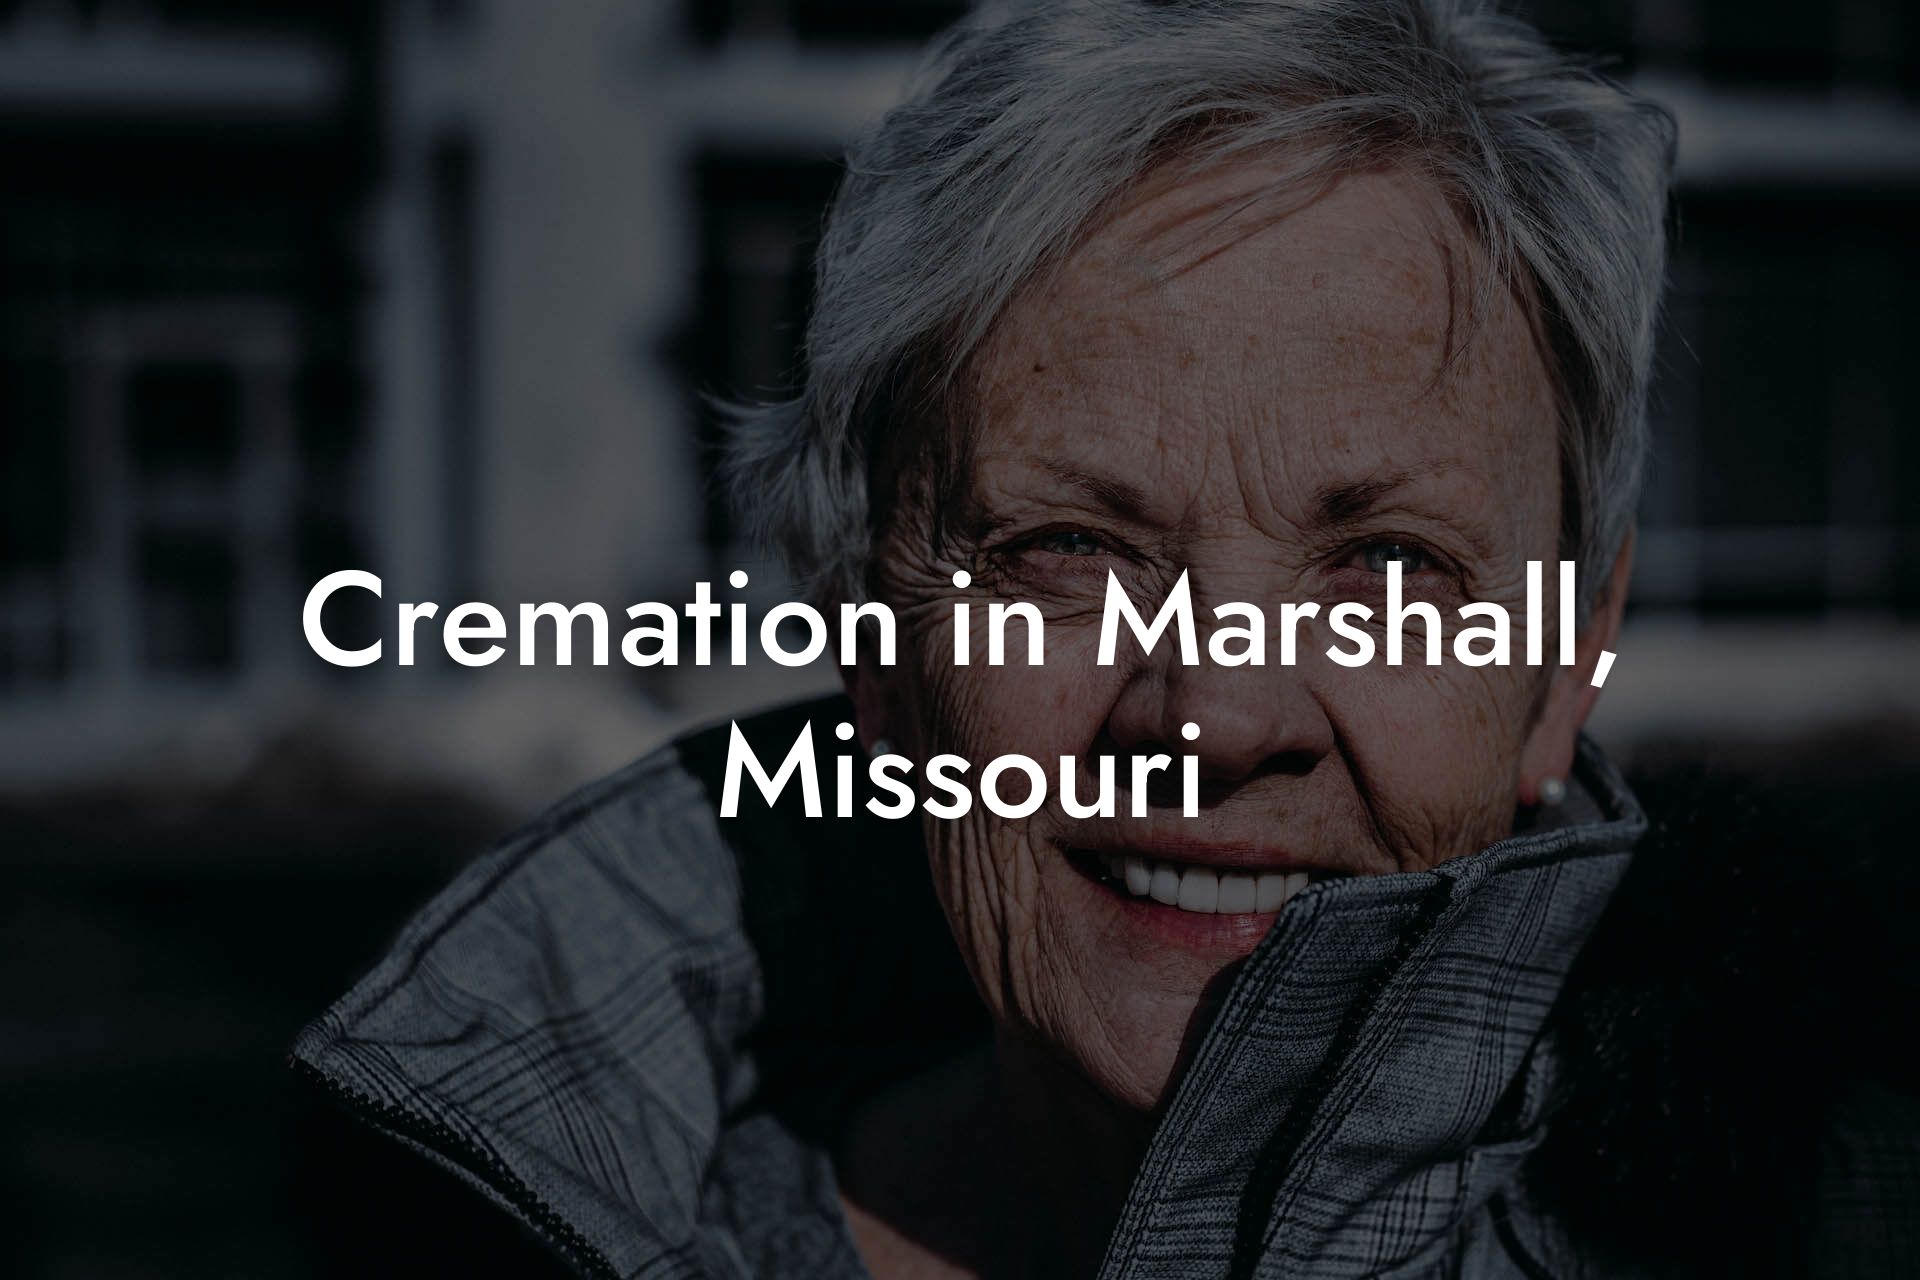 Cremation in Marshall, Missouri